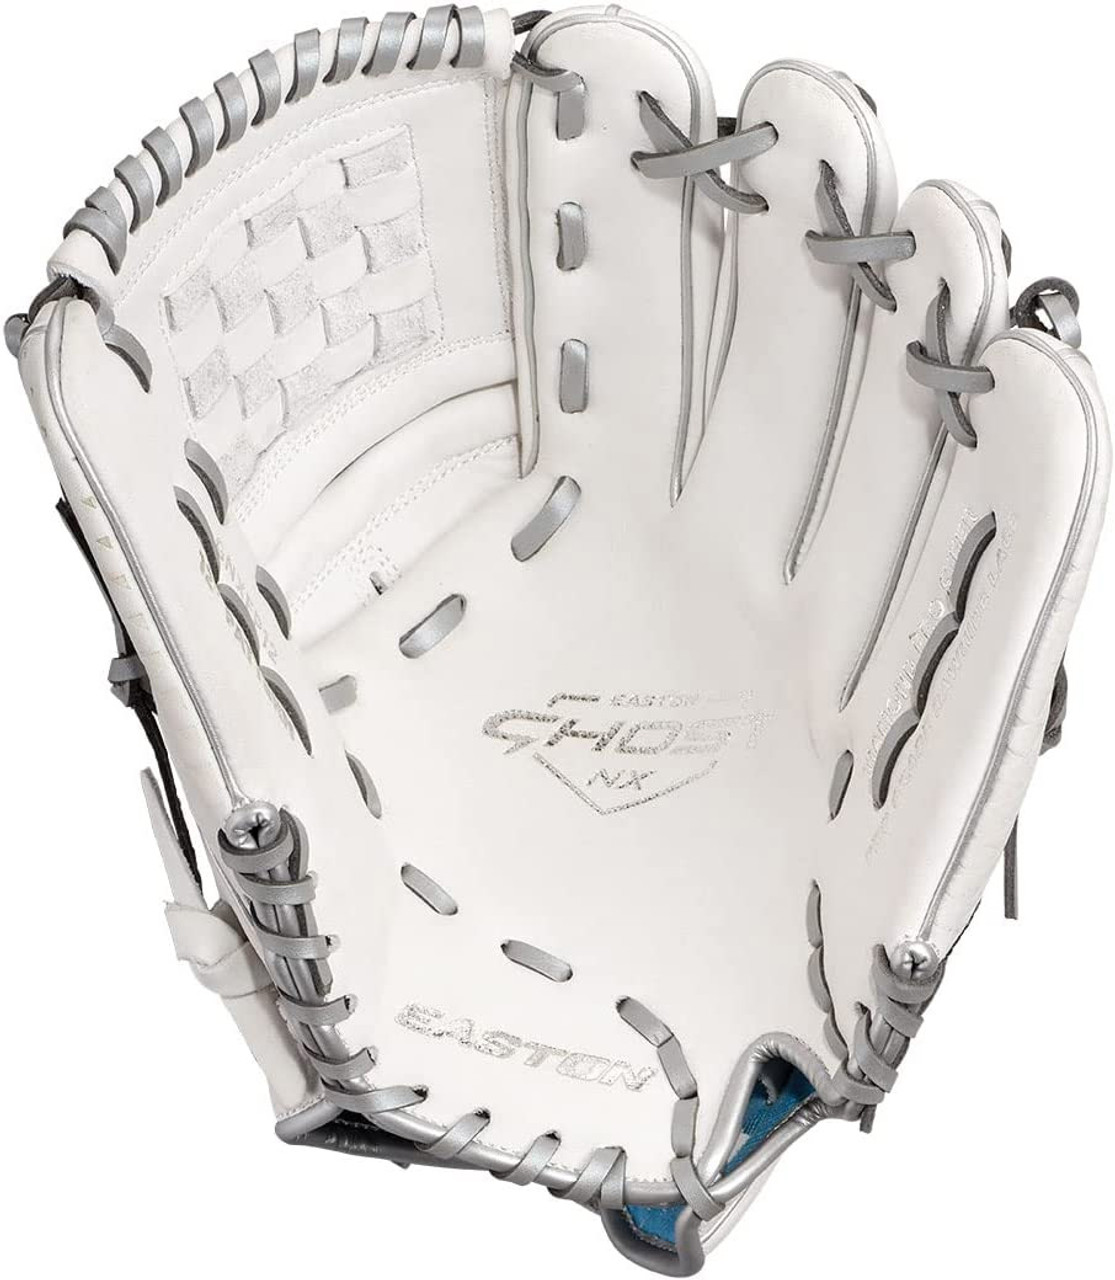 New Left Hand Throw Pitcher's Baseball Glove 11.75